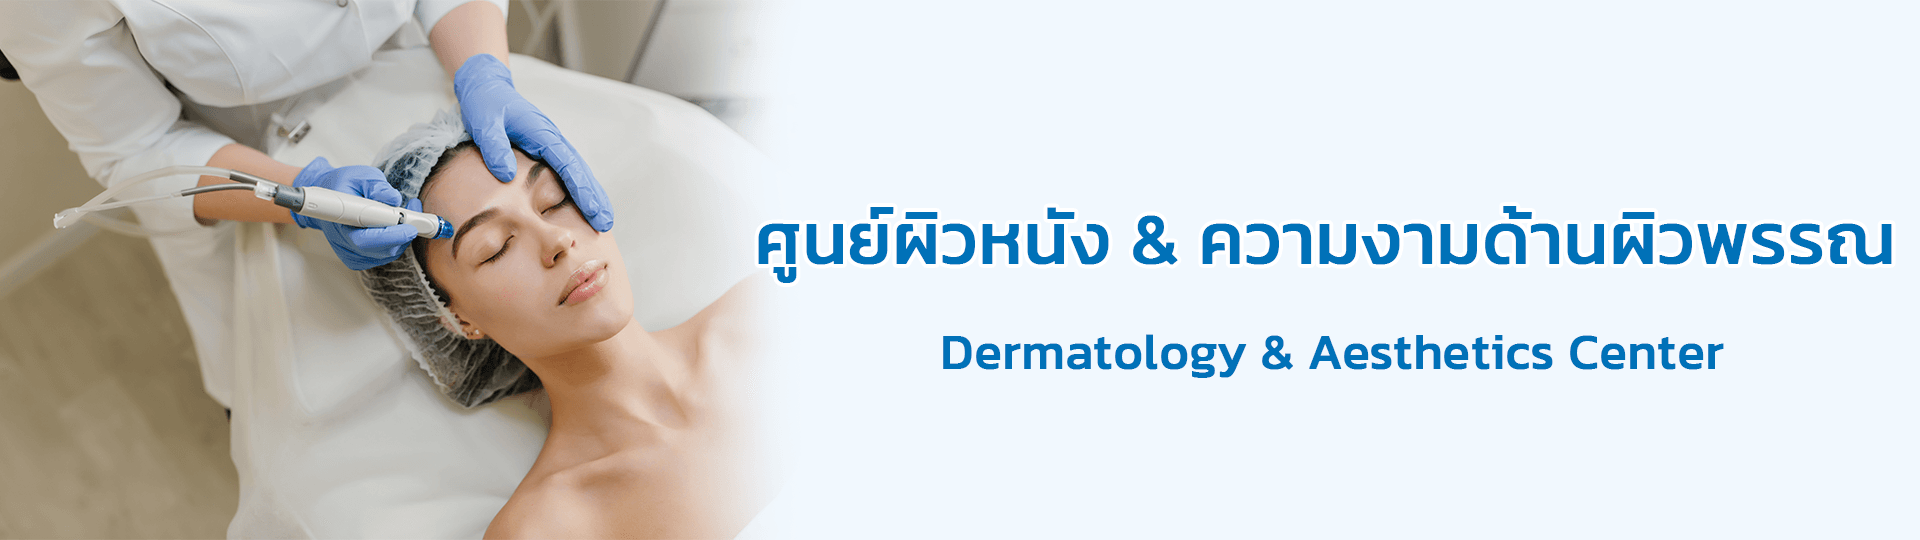 Dermatology & Aesthetics Center.png